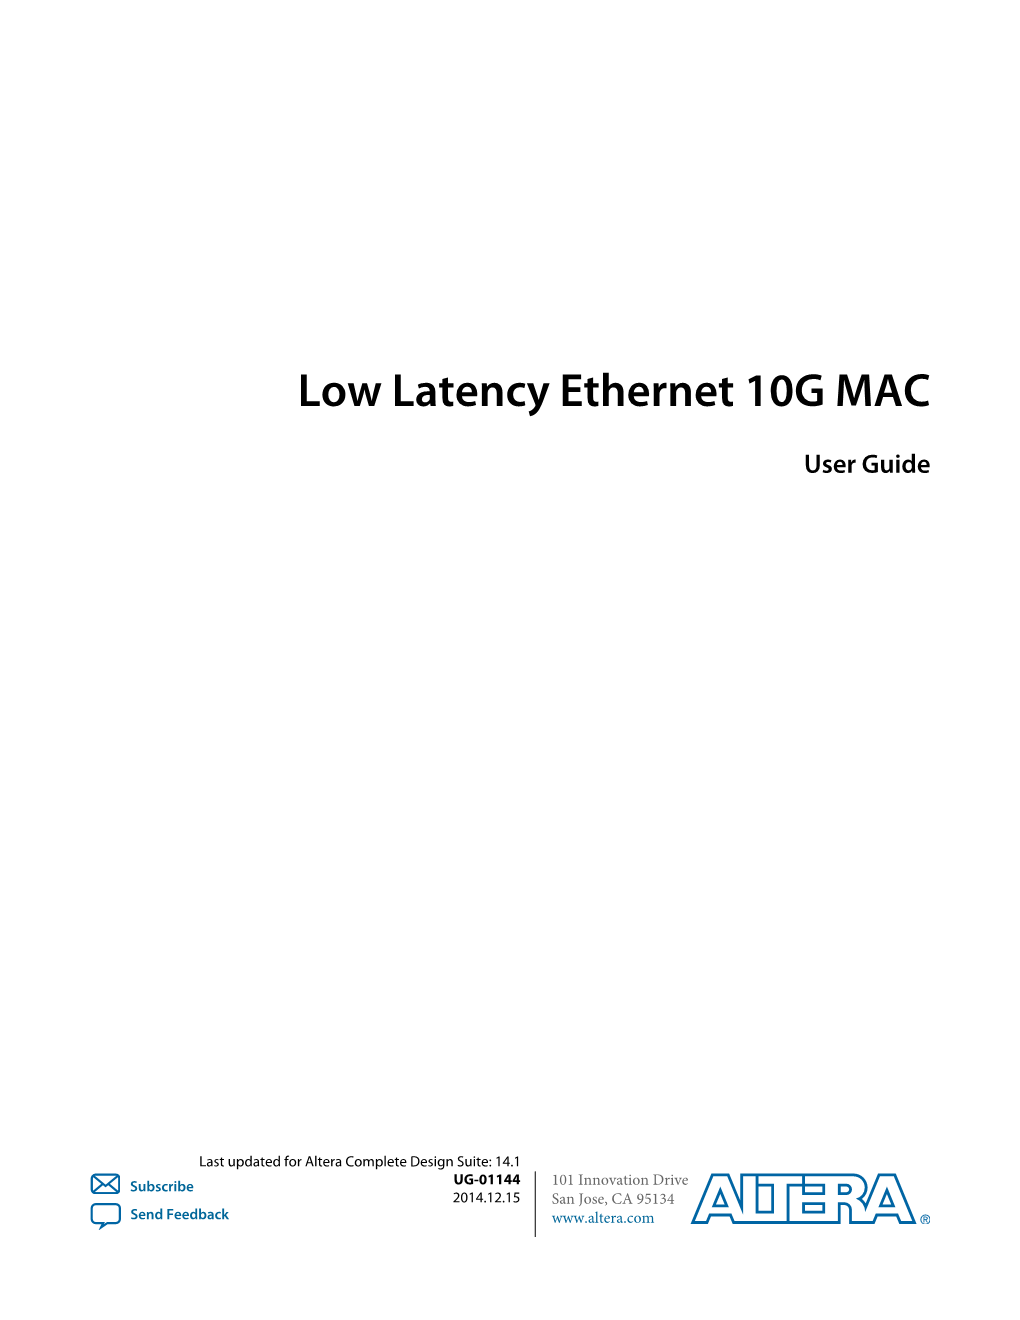 Low Latency Ethernet 10G MAC User Guide